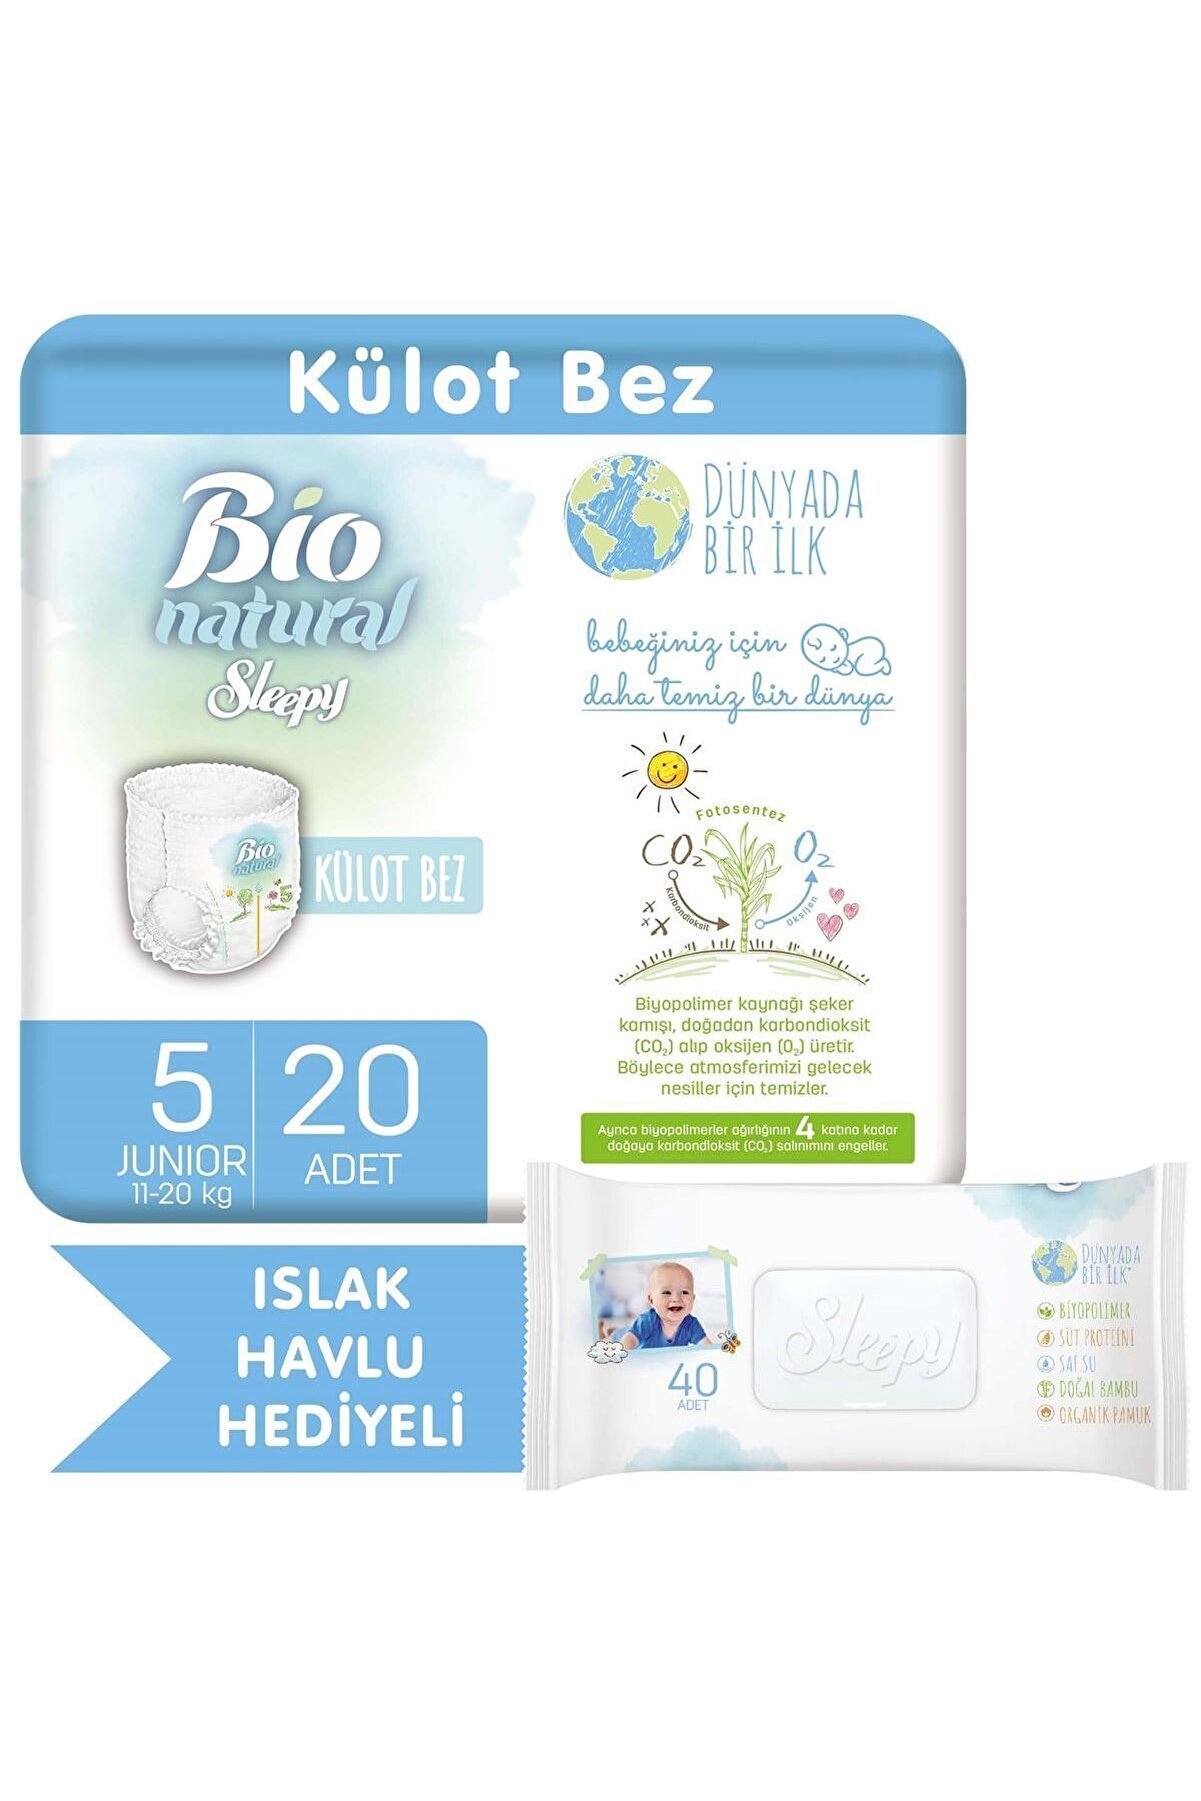 Sleepy Bio Natural Külot Bez 5 Numara Junior 20 Adet + Bio Natural Islak Havlu Hediyeli